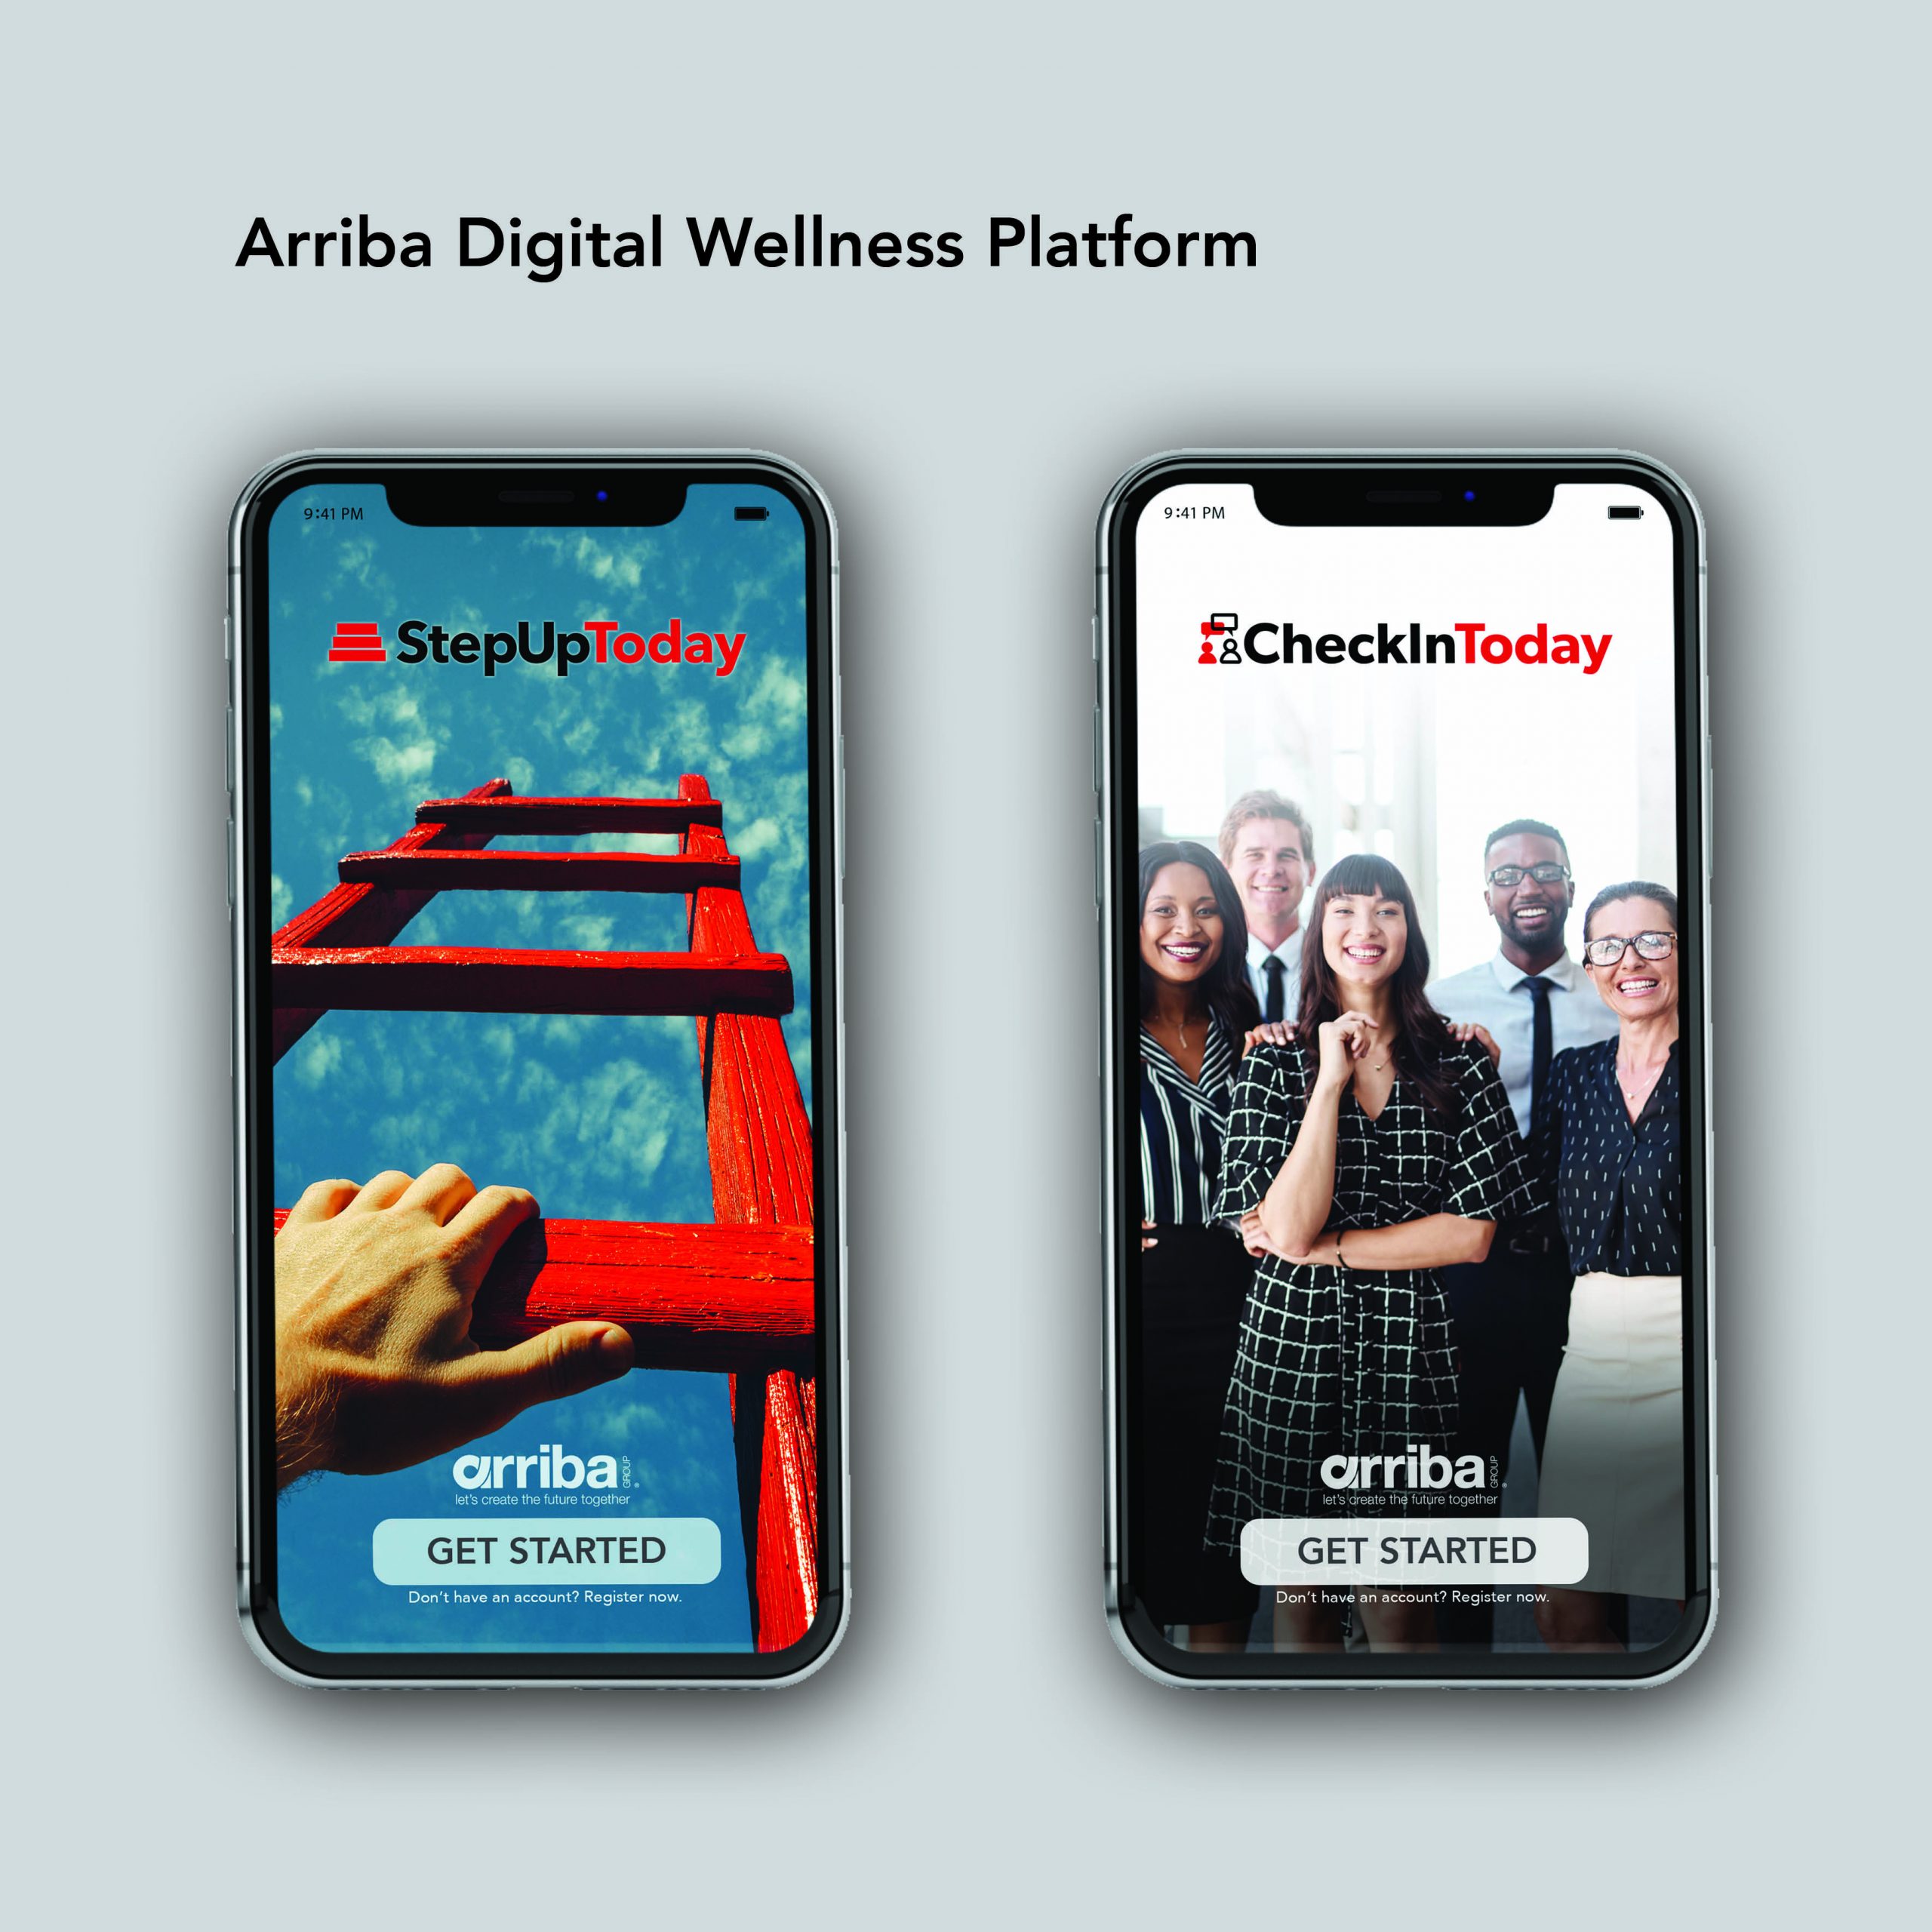 Arriba’s Digital Wellness Platform – Our Approach to Innovation